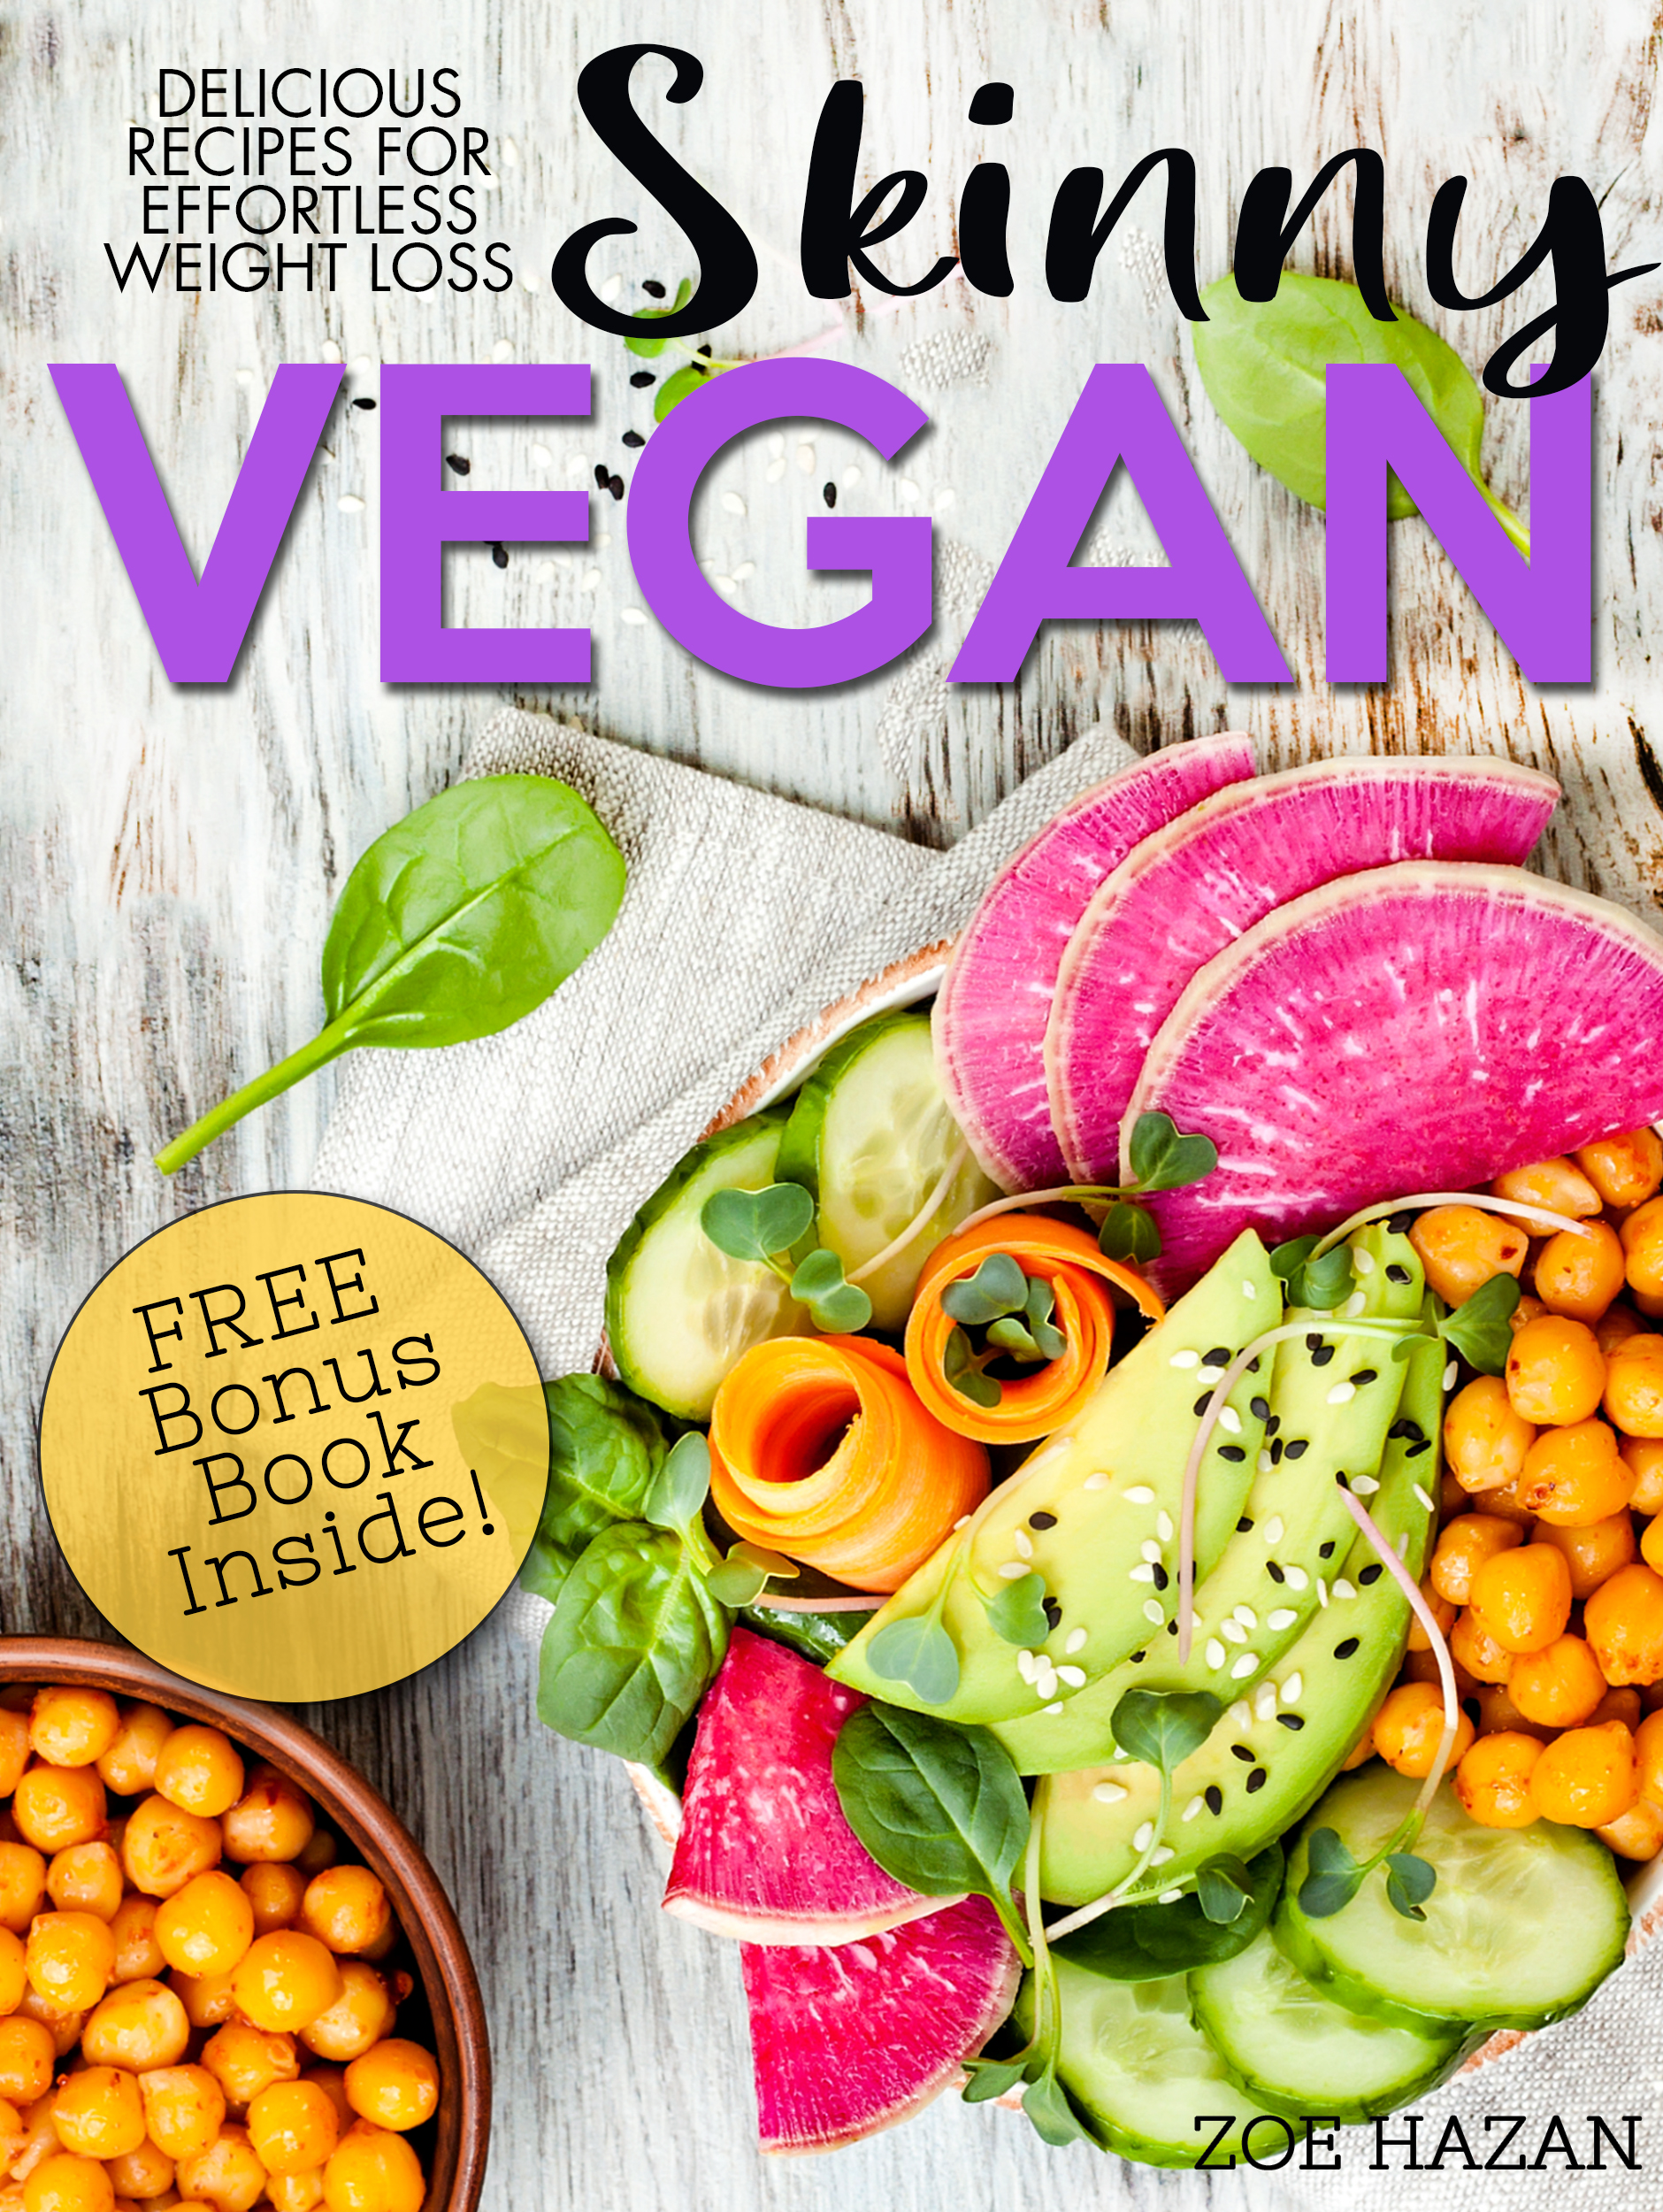 FREE: The Skinny Vegan Cookbook by Zoe Hazan